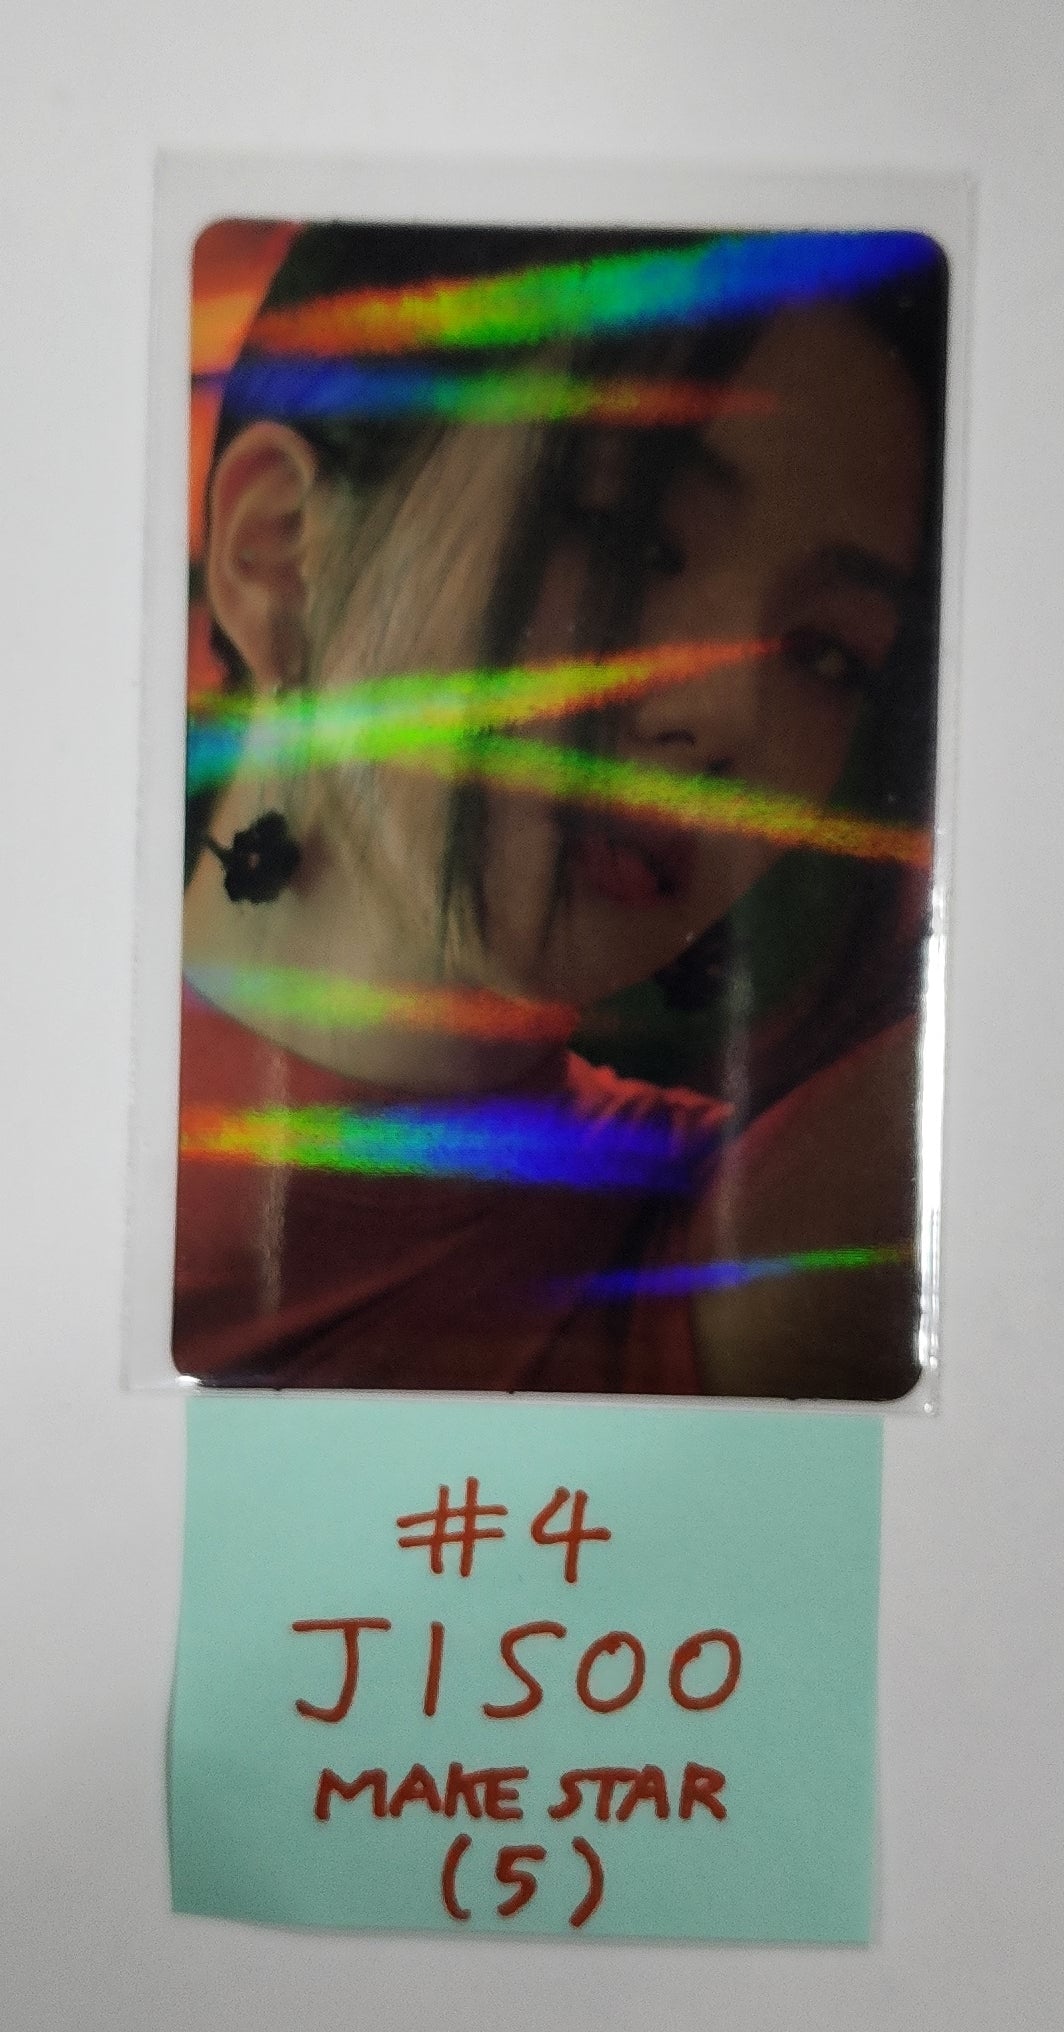 JISOO (Of Black Pink) "ME" 1st Single Album - Makestar Pre-Order Benefit Hologram Photocard